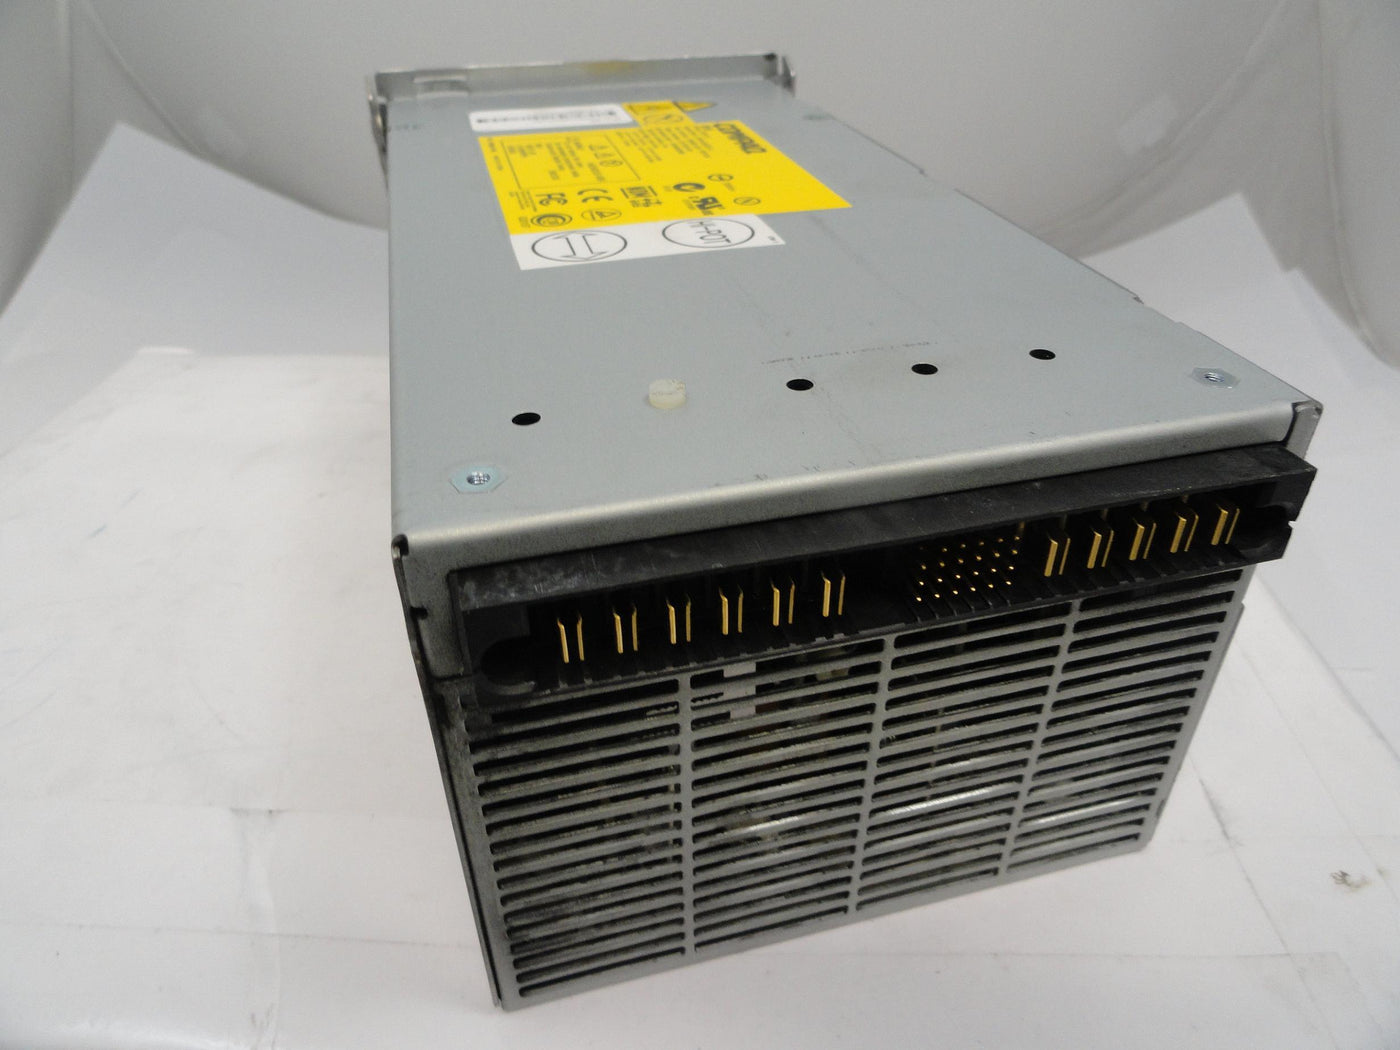 MC3228_DPS-600CB-A_Compaq 600W Hot Plug Redundant PSU - Image3